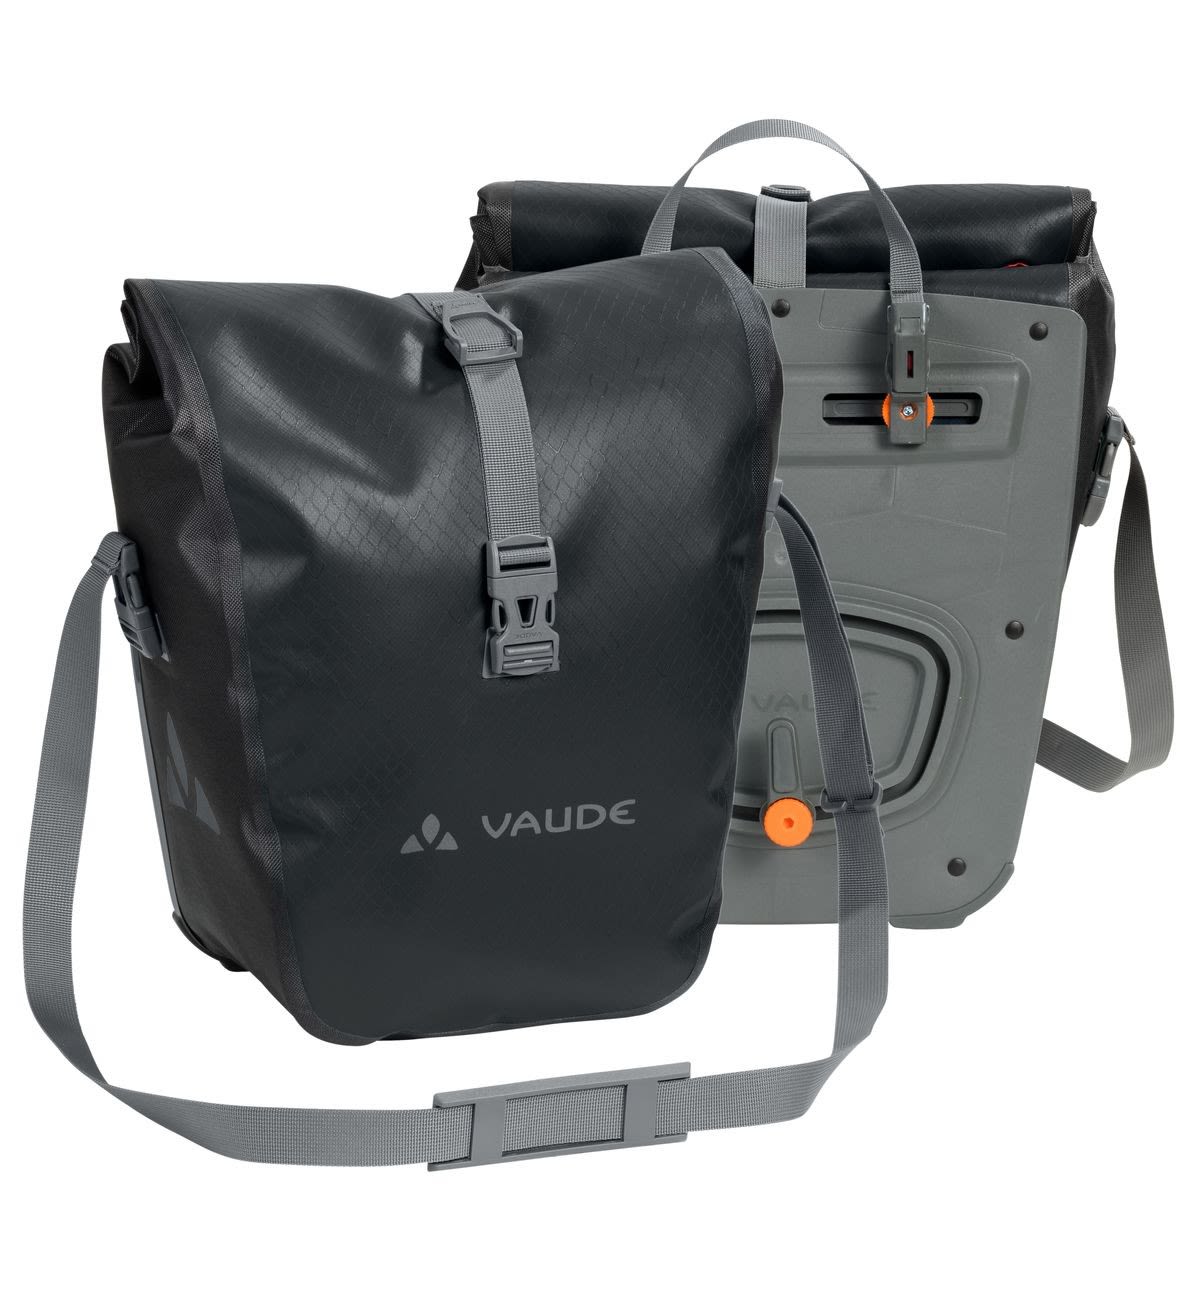 Vaude Aqua Front Schwarz- Fahrradtaschen- Grsse 28l - Farbe Black